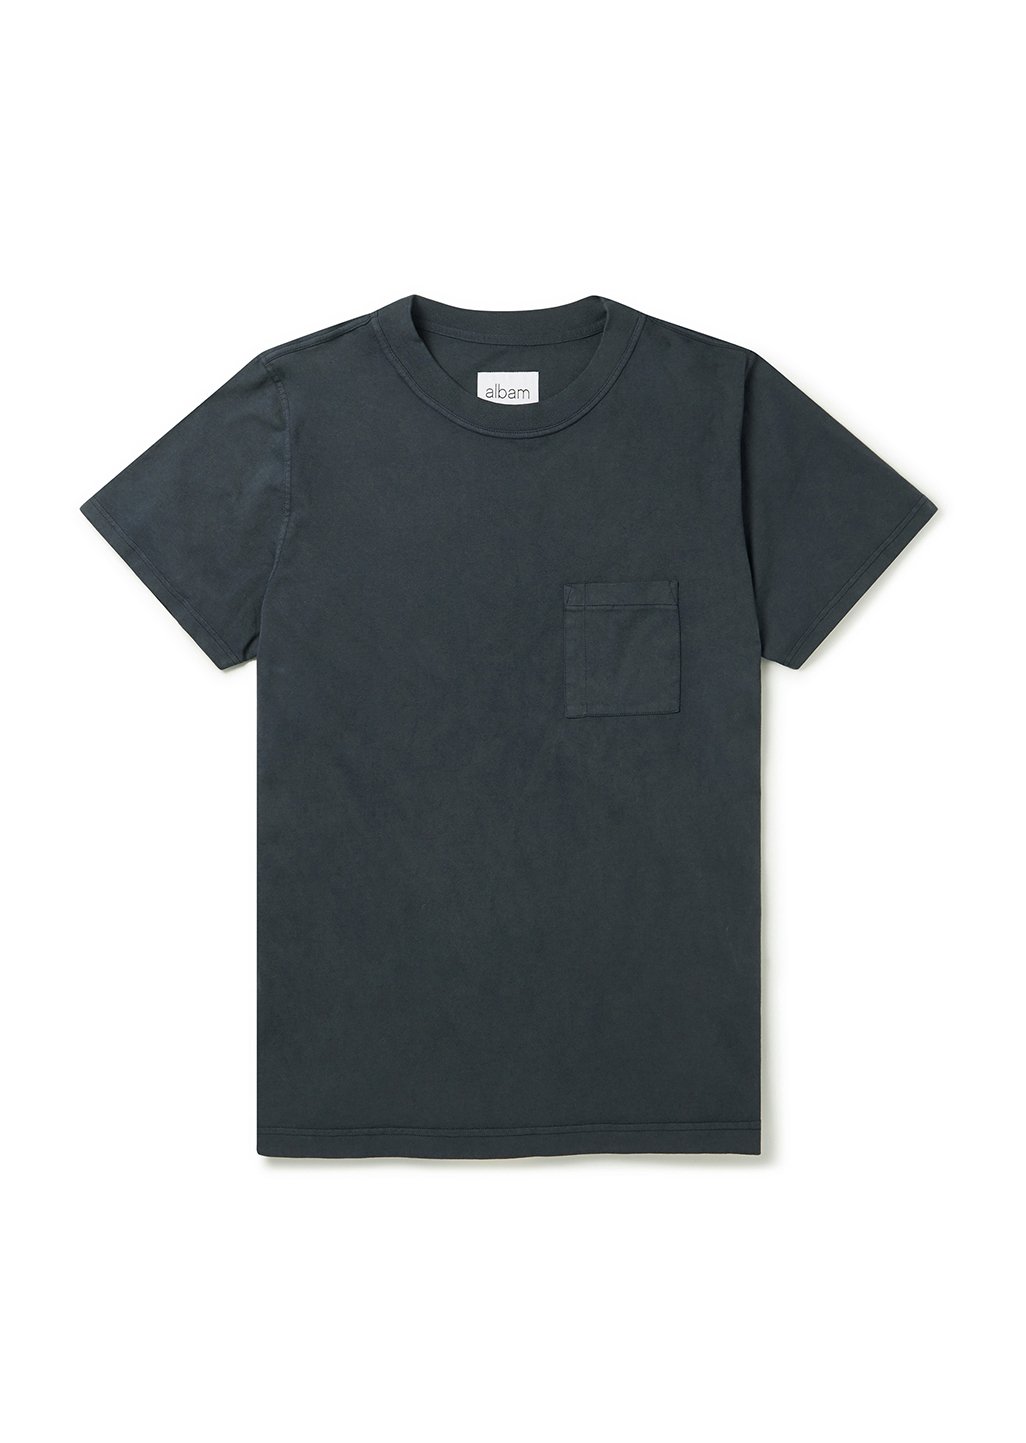 Albam Workwear T-Shirt - Charcoal